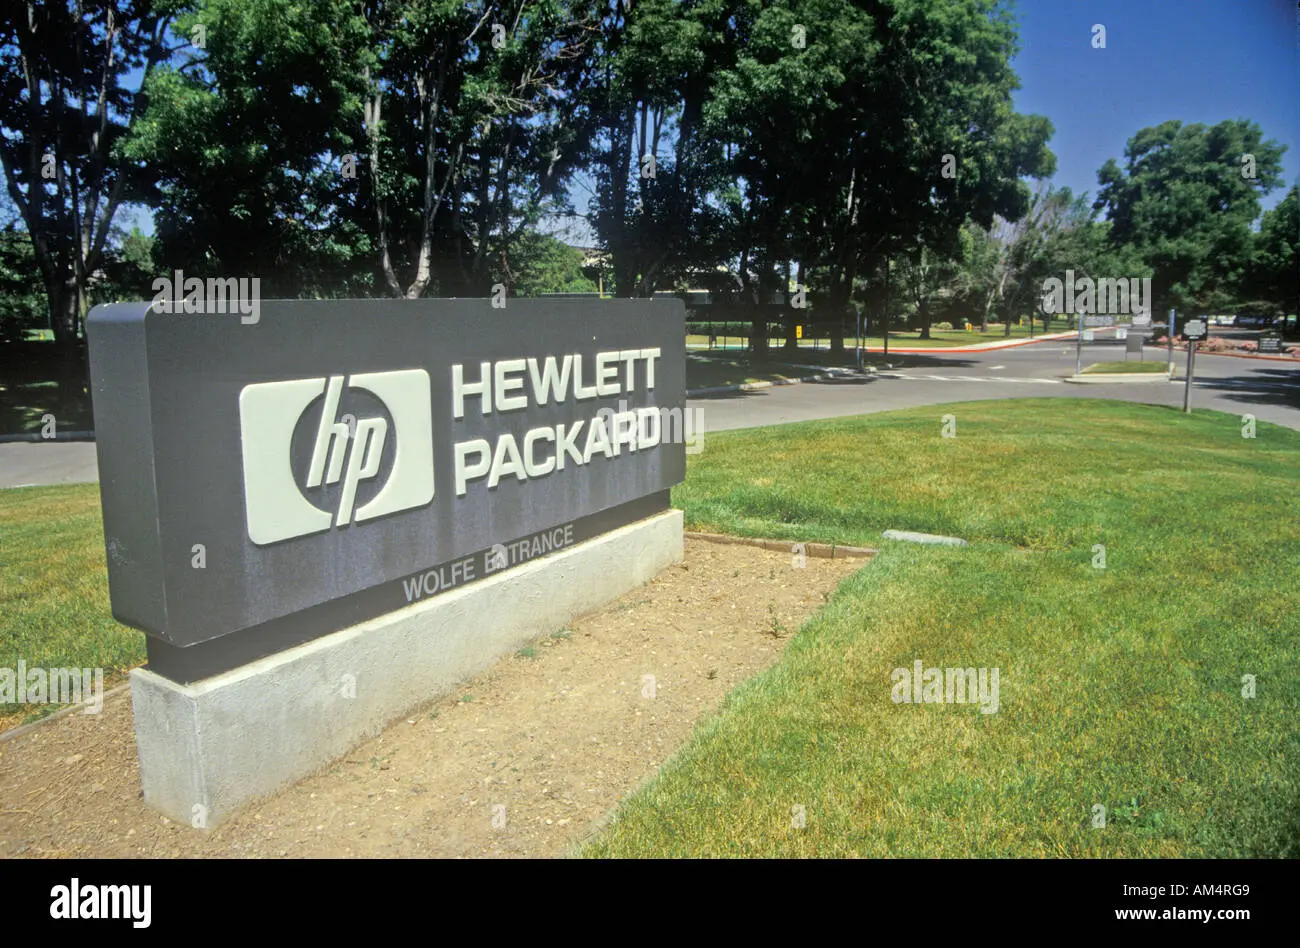 hewlett packard company cupertino california - What company is in Cupertino California